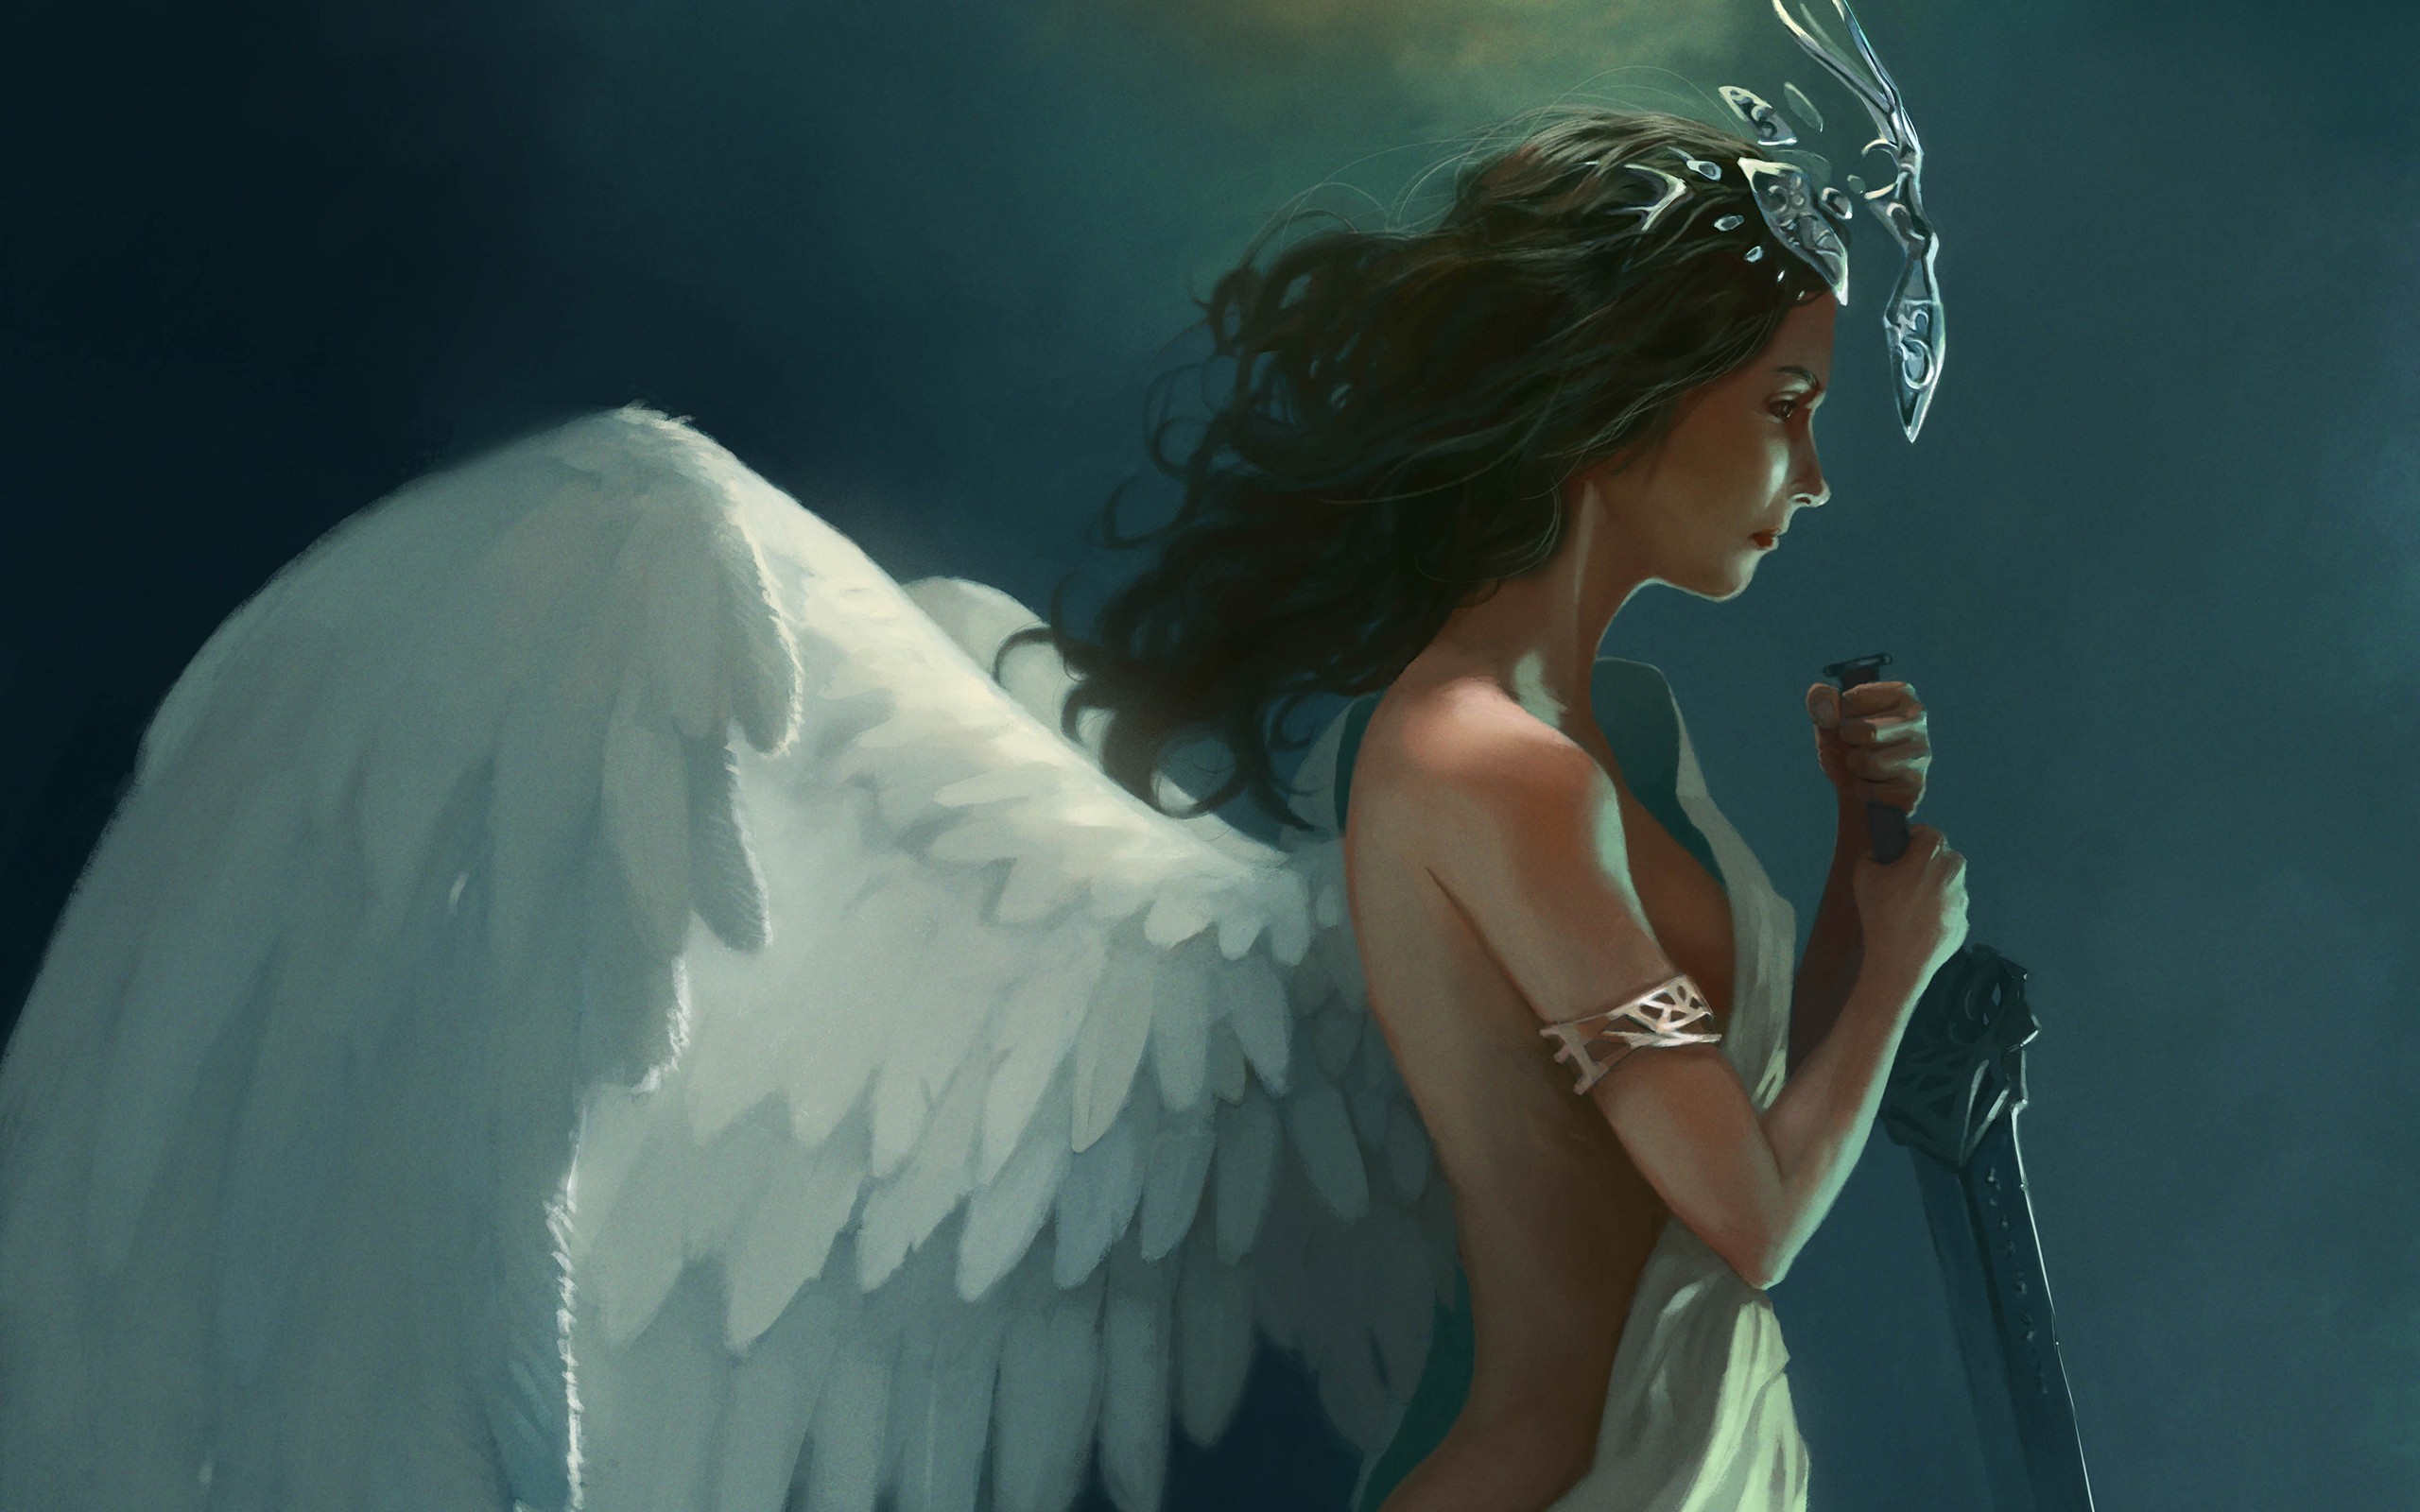 General 2560x1600 sword wings women artwork angel angel wings fantasy art fantasy girl brunette long hair women with swords